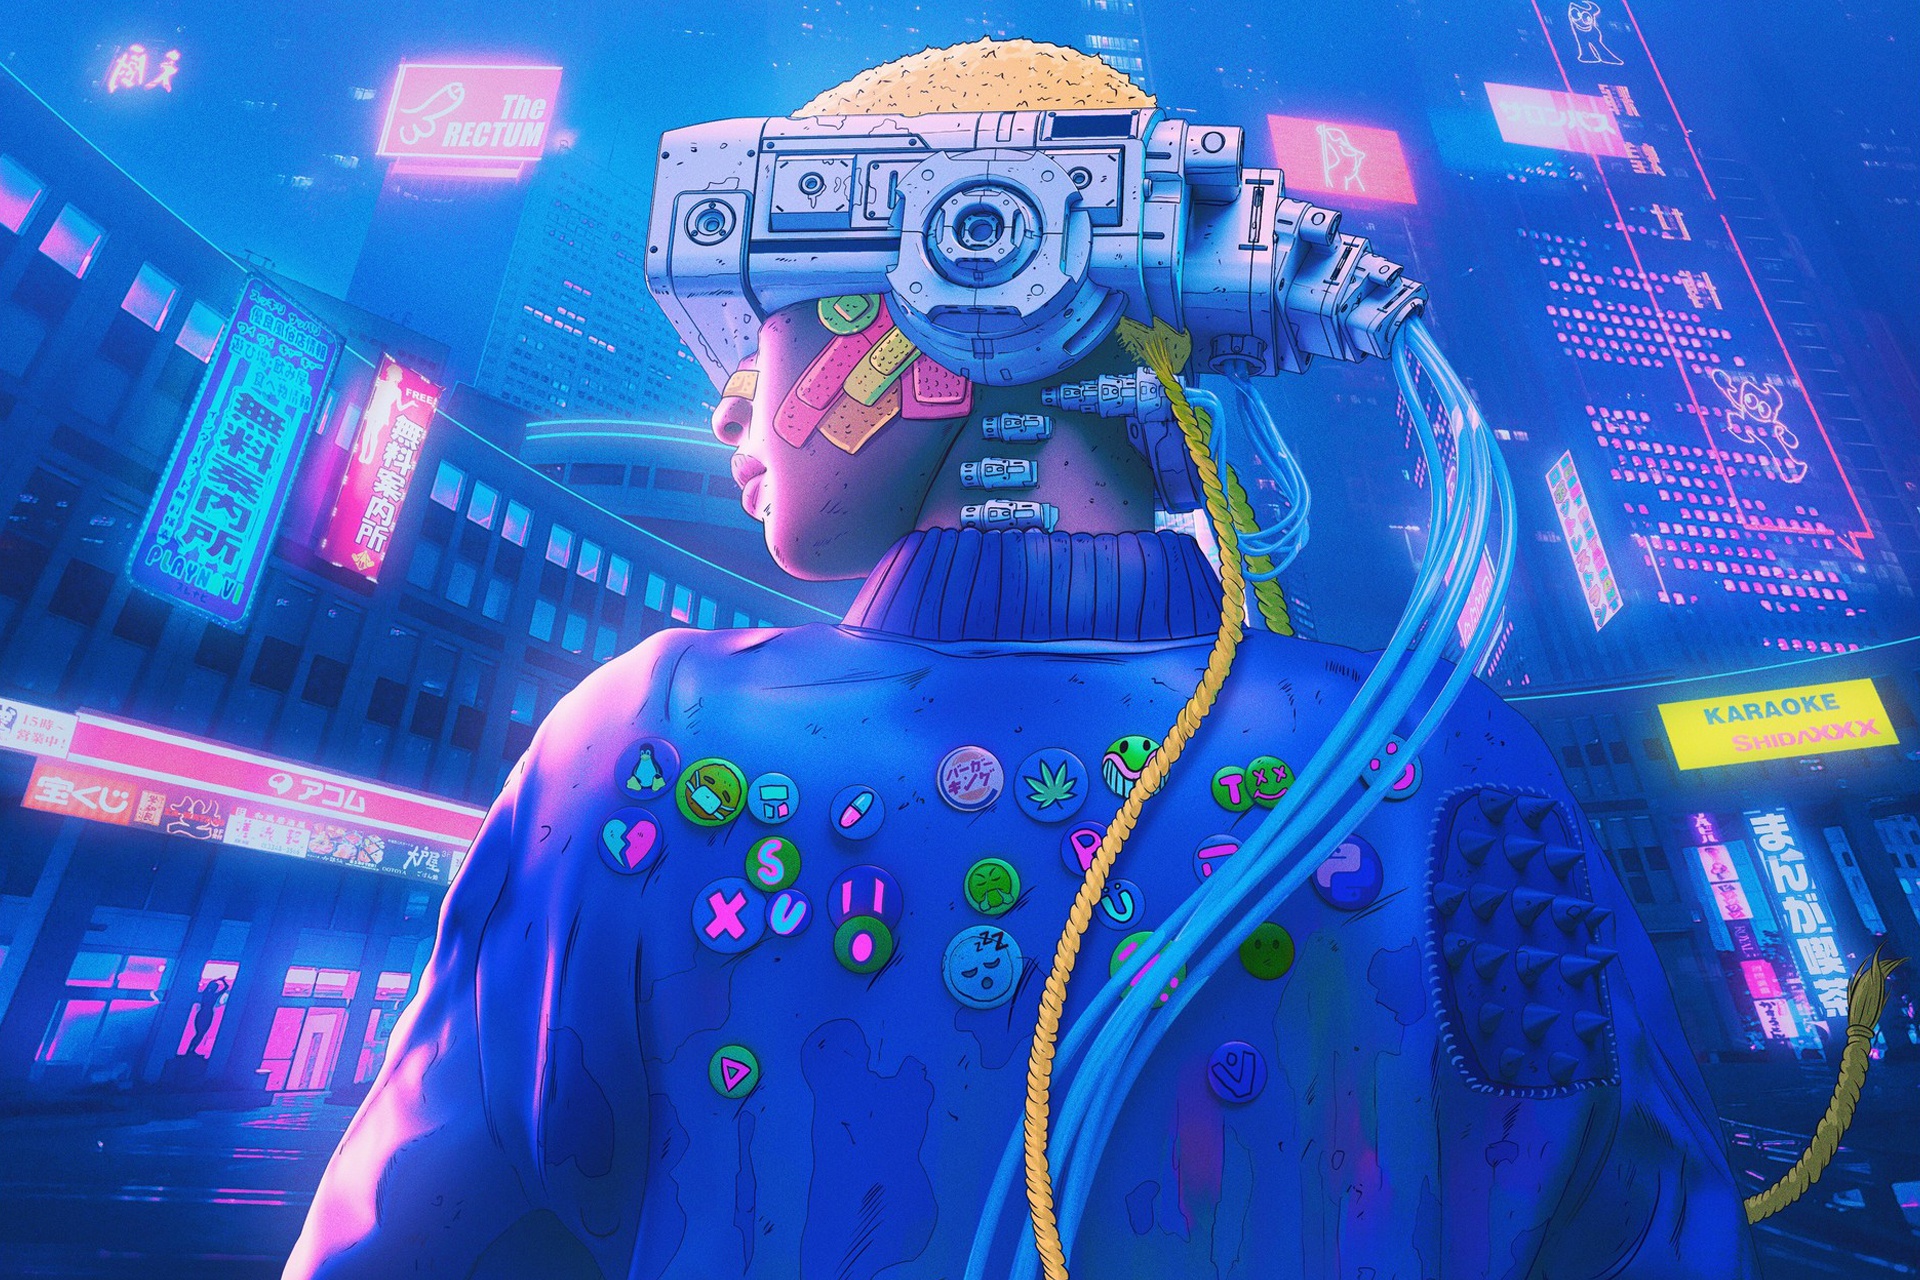 General 1920x1280 futuristic colorful neon science fiction cyberpunk artwork